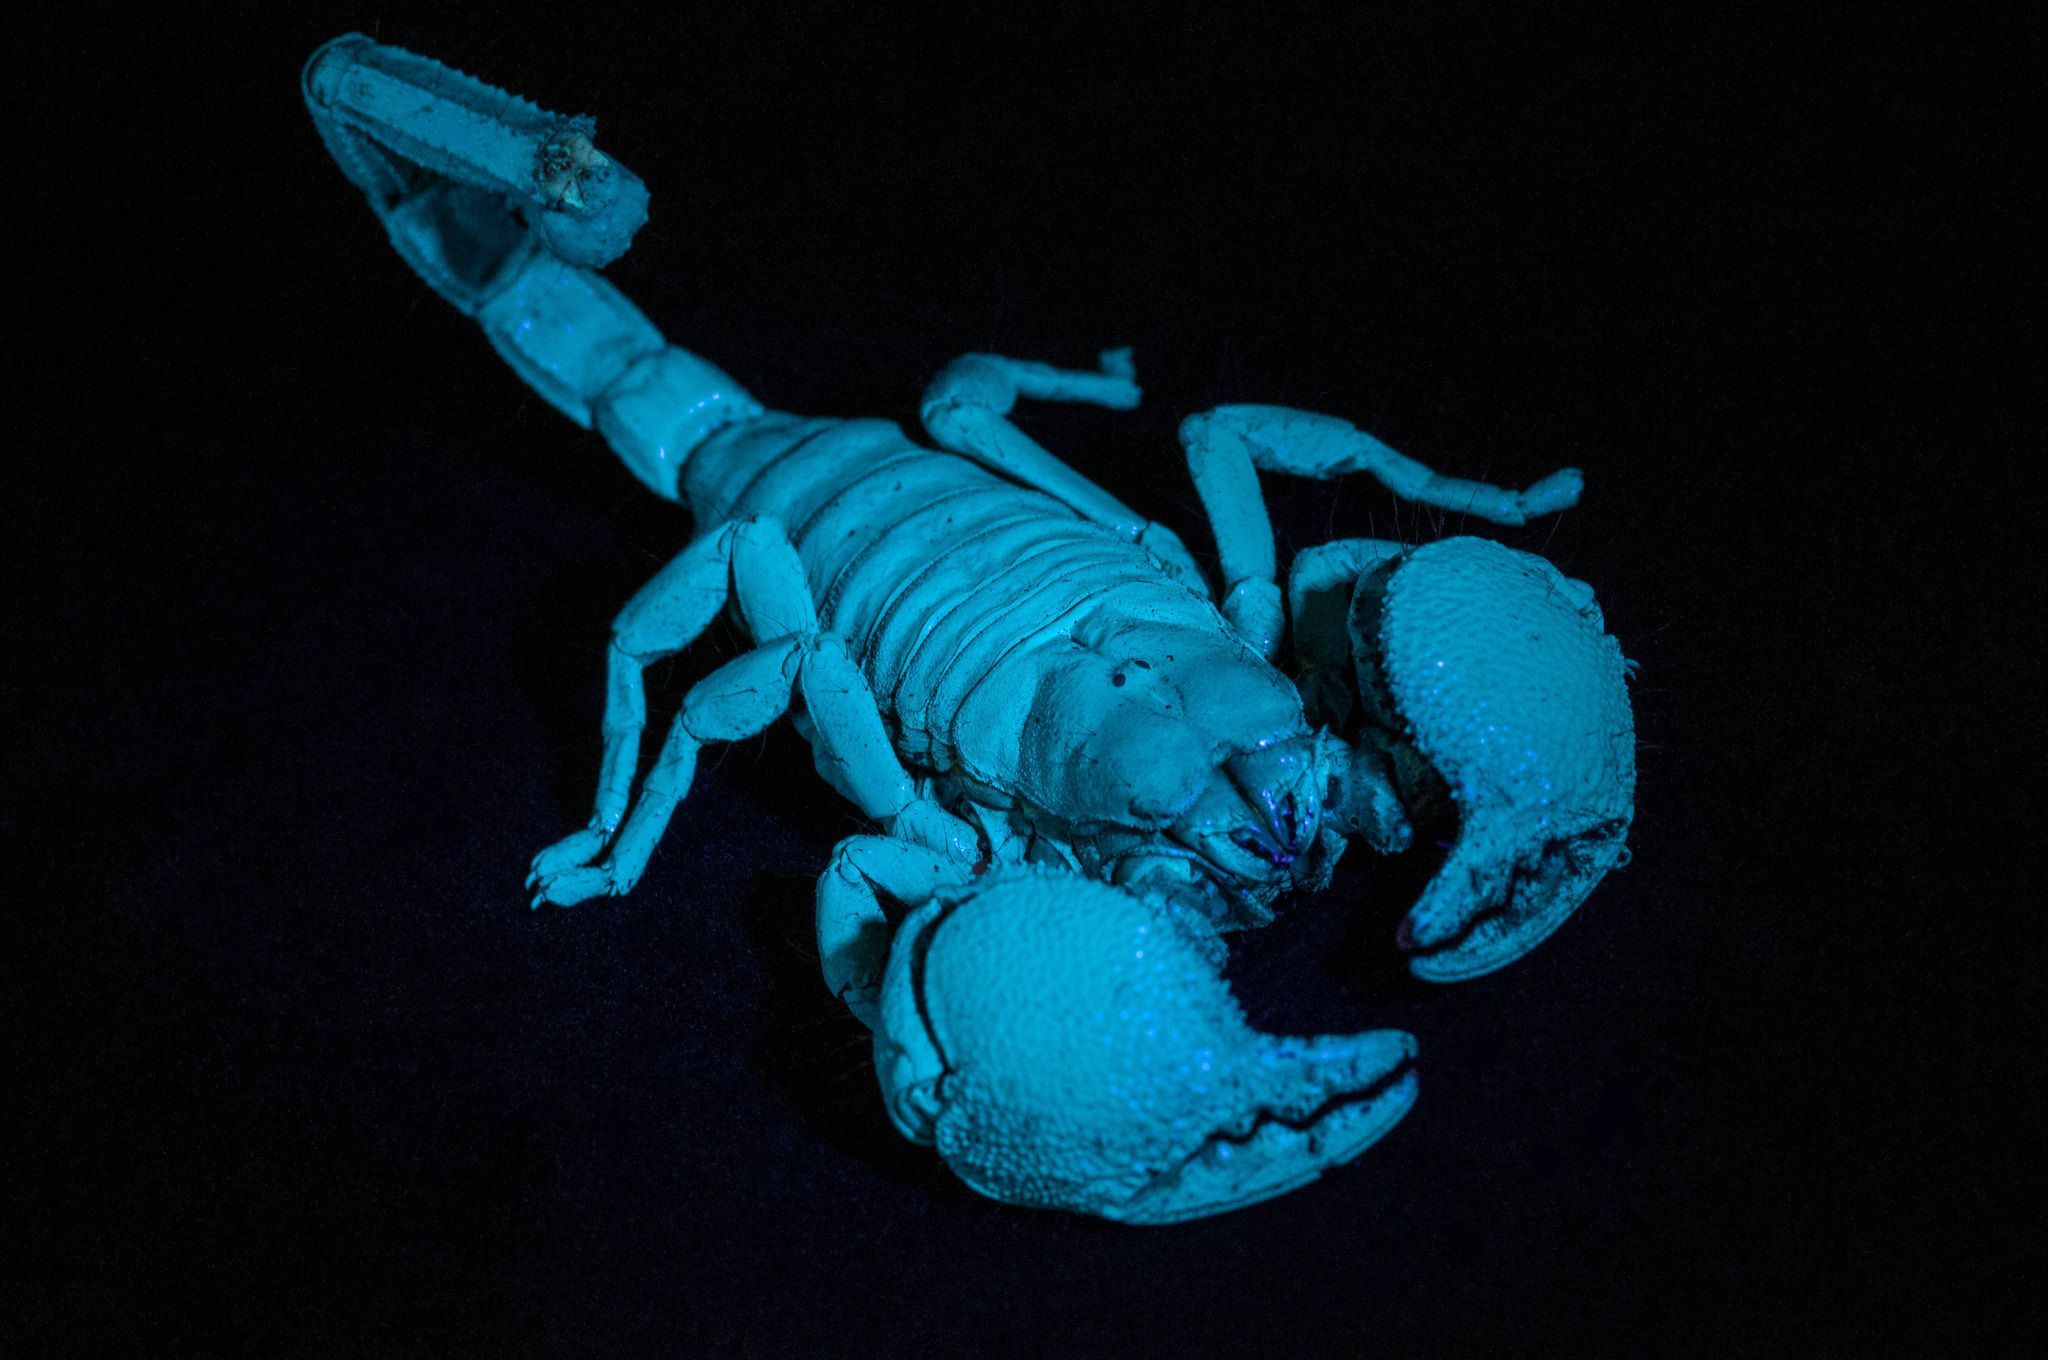 A photo of a scorpion under UV light